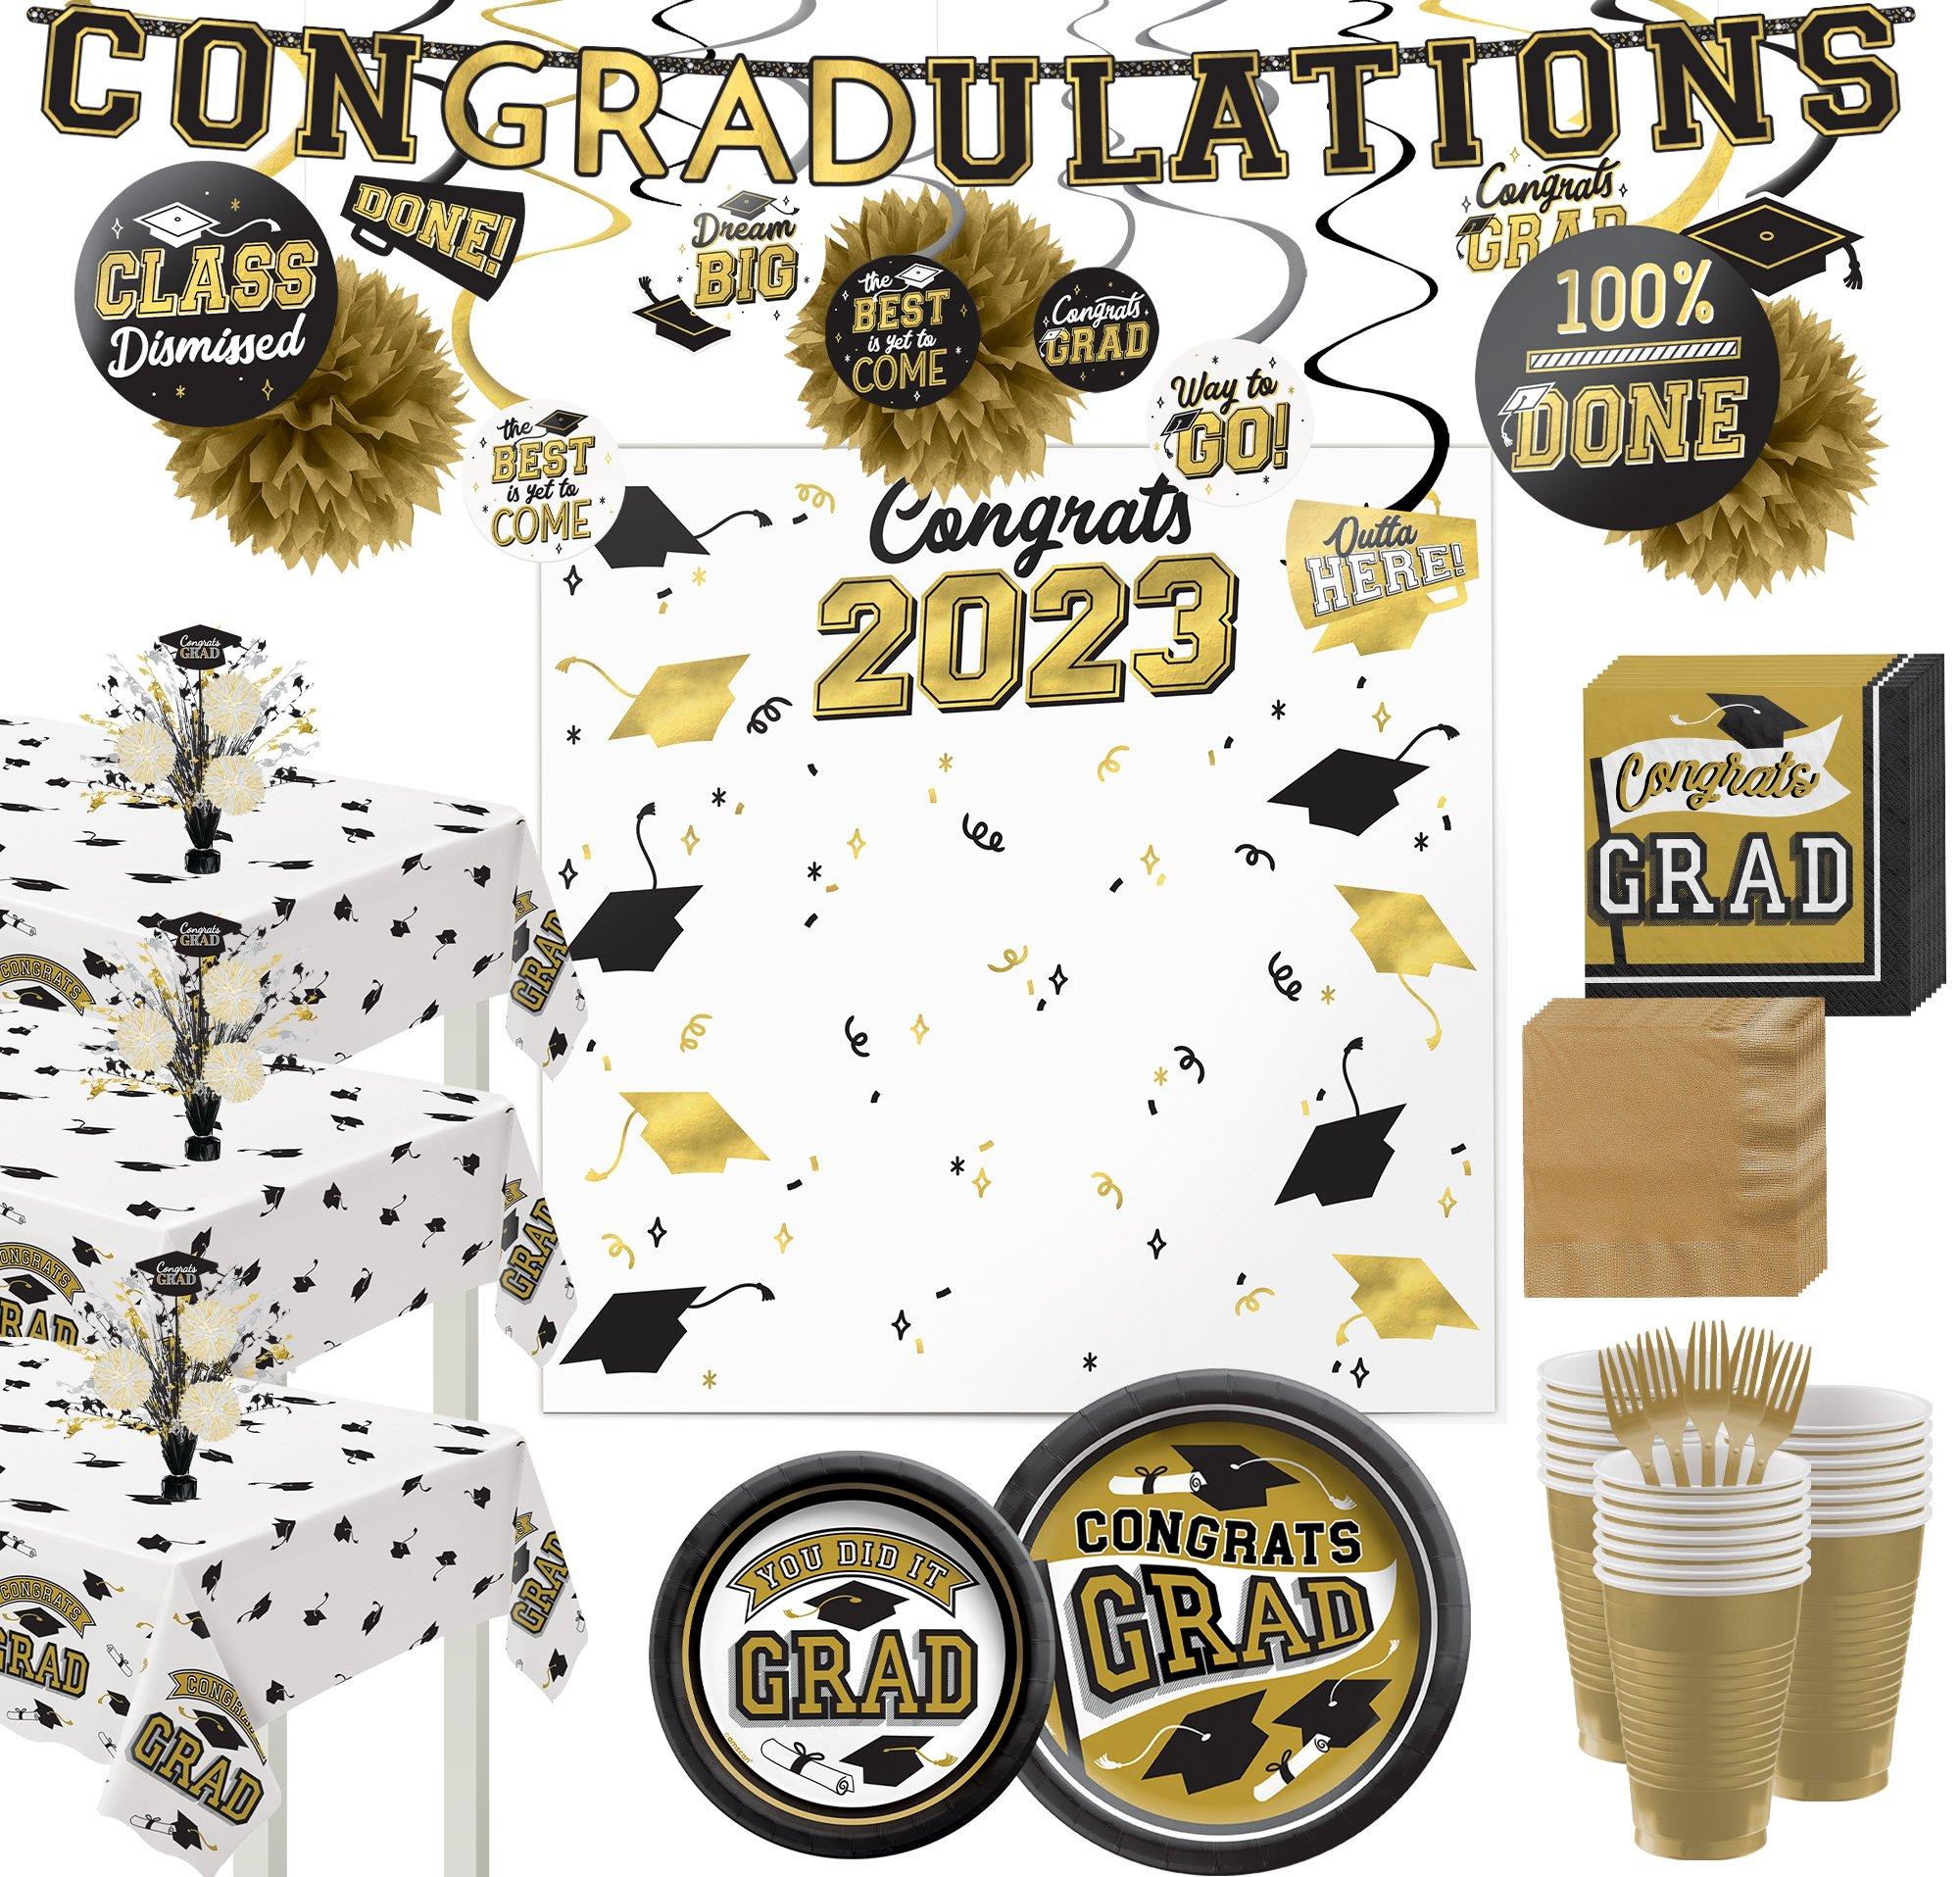 Gold Congrats Grad Graduation Party Kit for 100 Guests | Party City